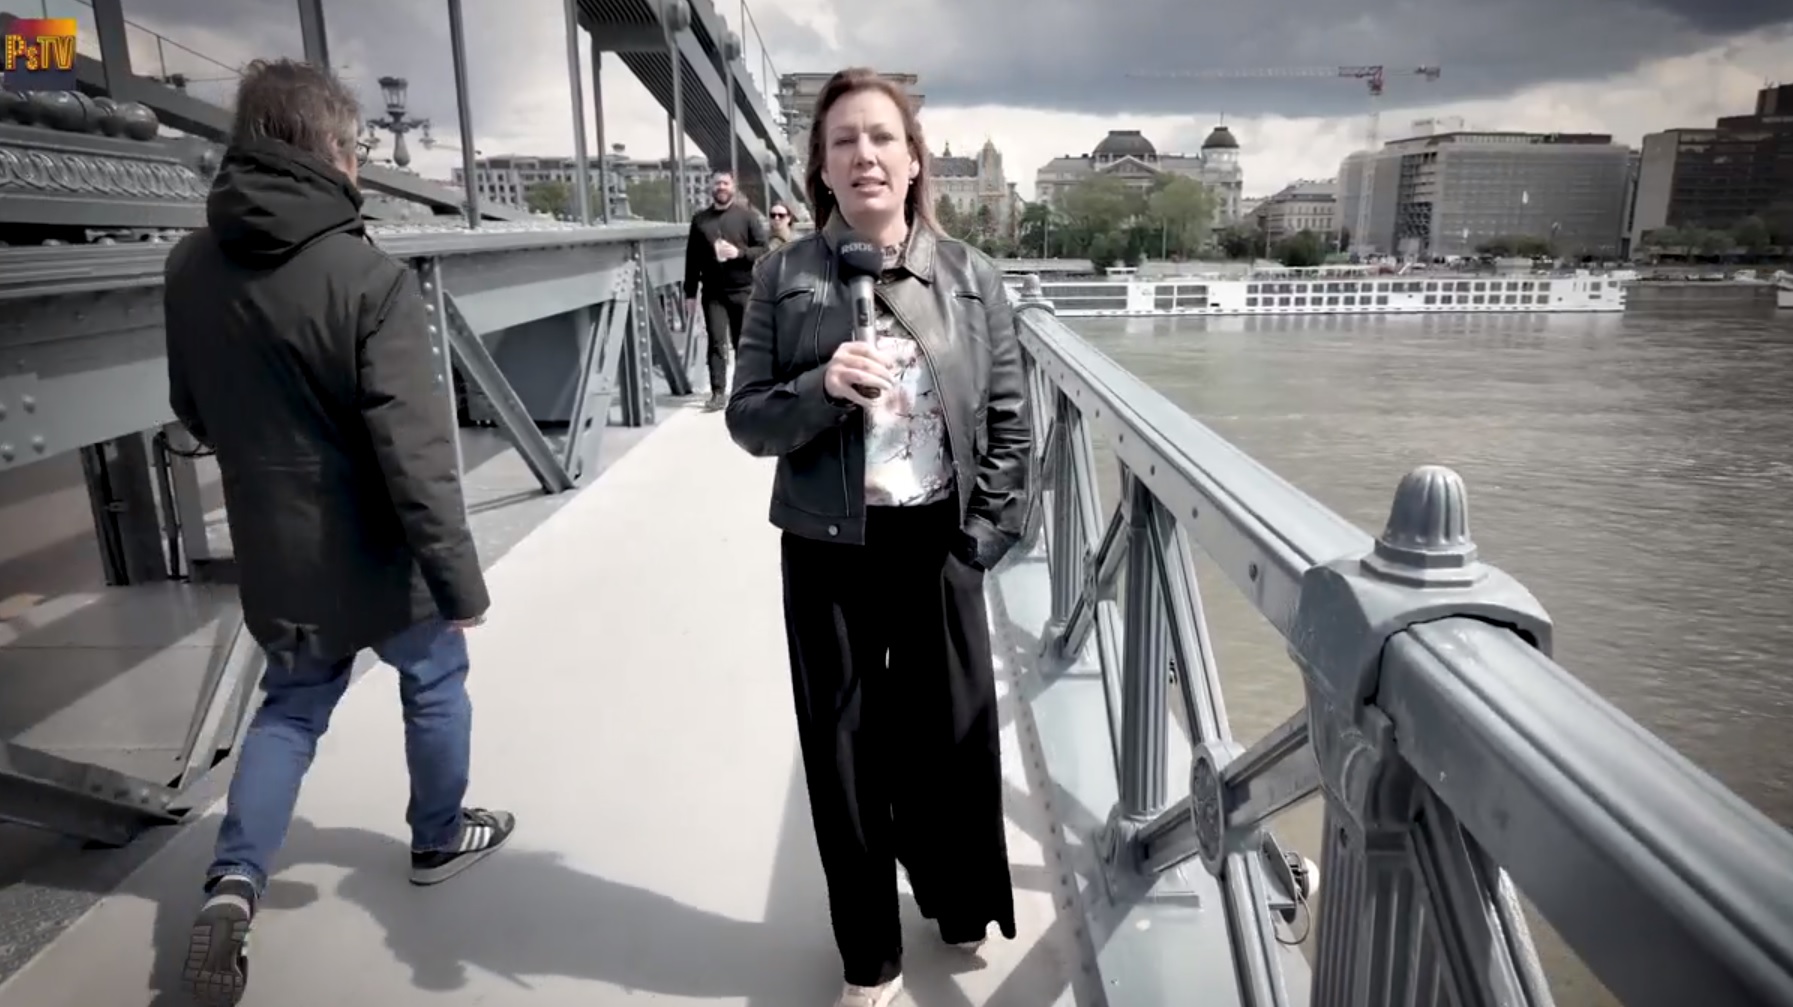 Hídpénzbotrány: leleplező videóriportot közölt a Pesti Srácok